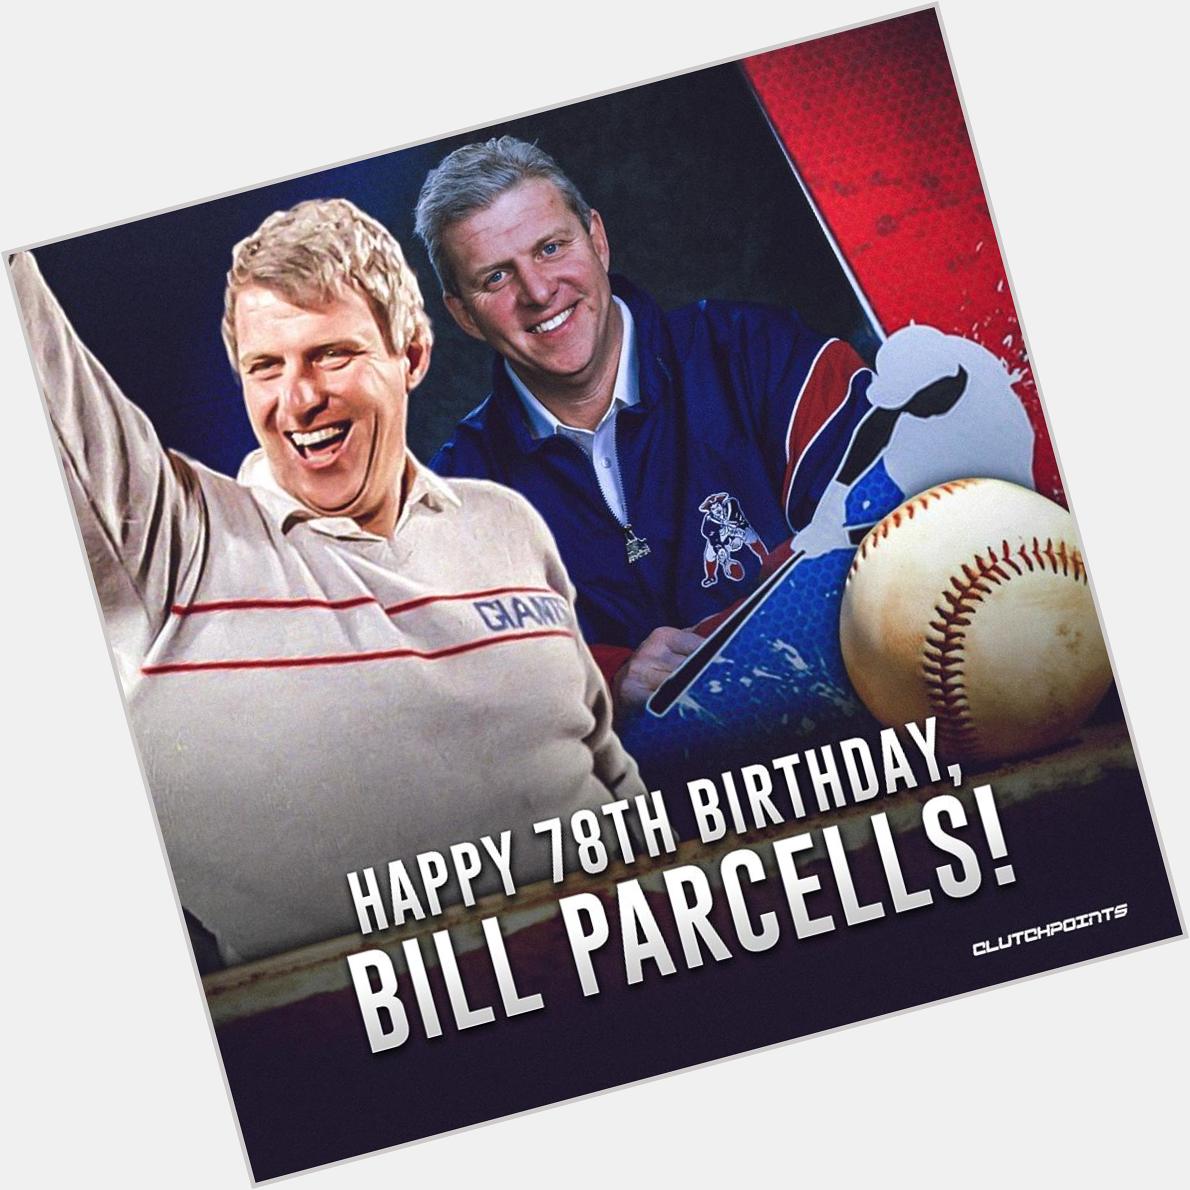 Wishing Bill Parcells a happy birthday!  